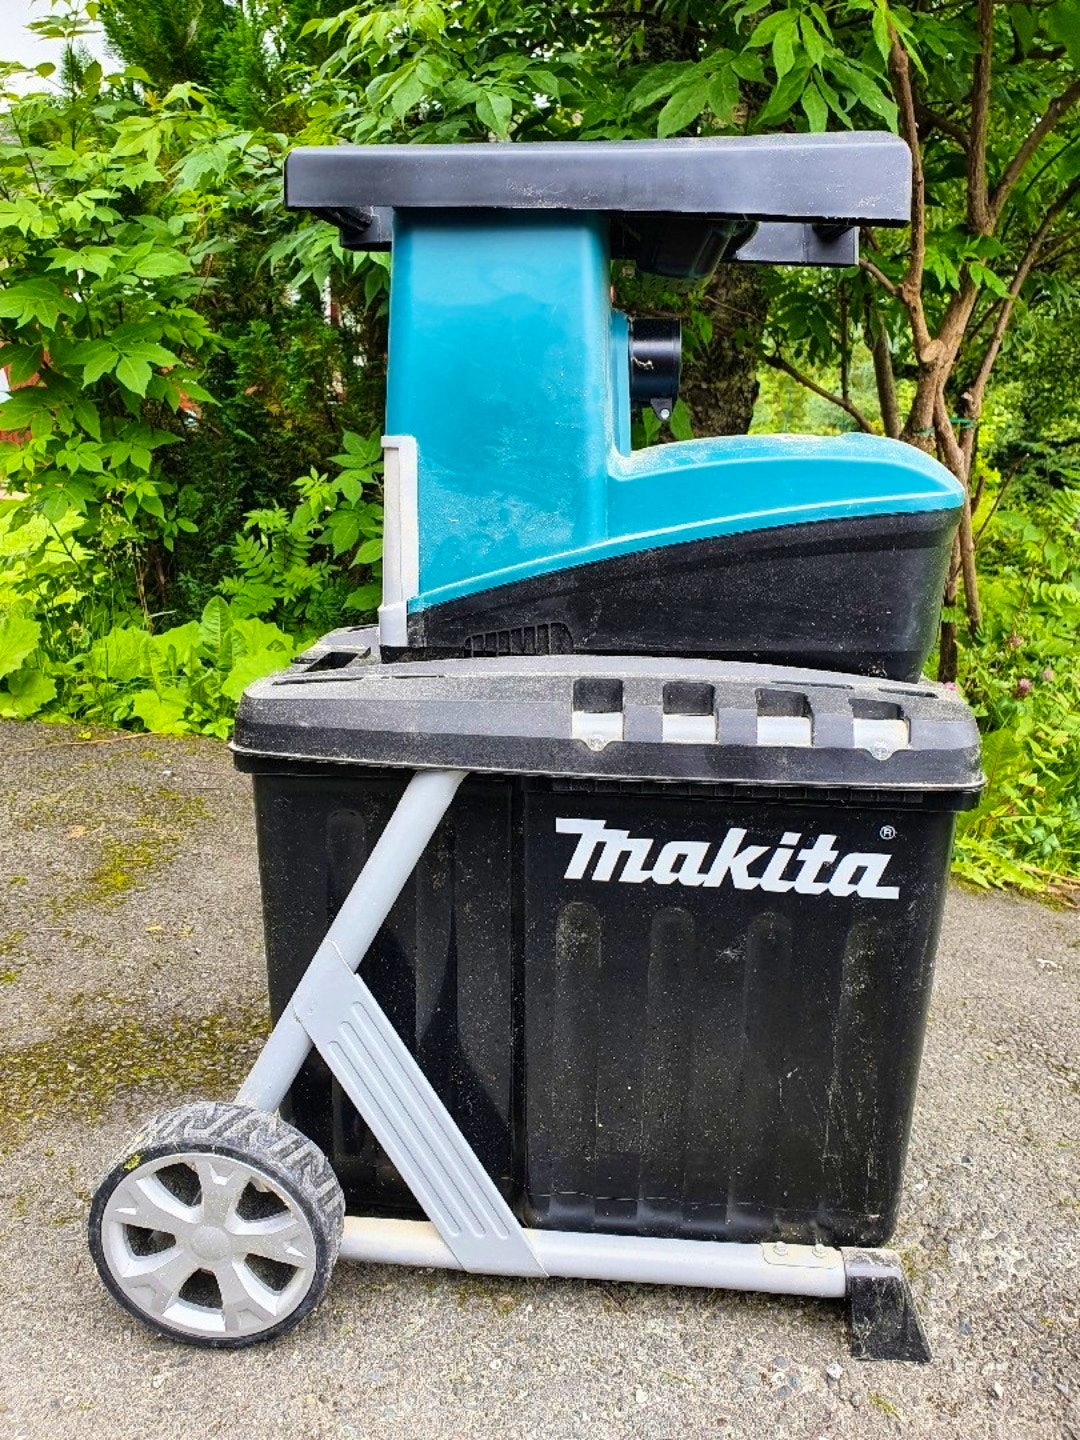 New Zealand Skorpe Dem Lei Makita kompostkvern av Marius U i Trondheim, Trøndelag for 71 - 200  kr/dag